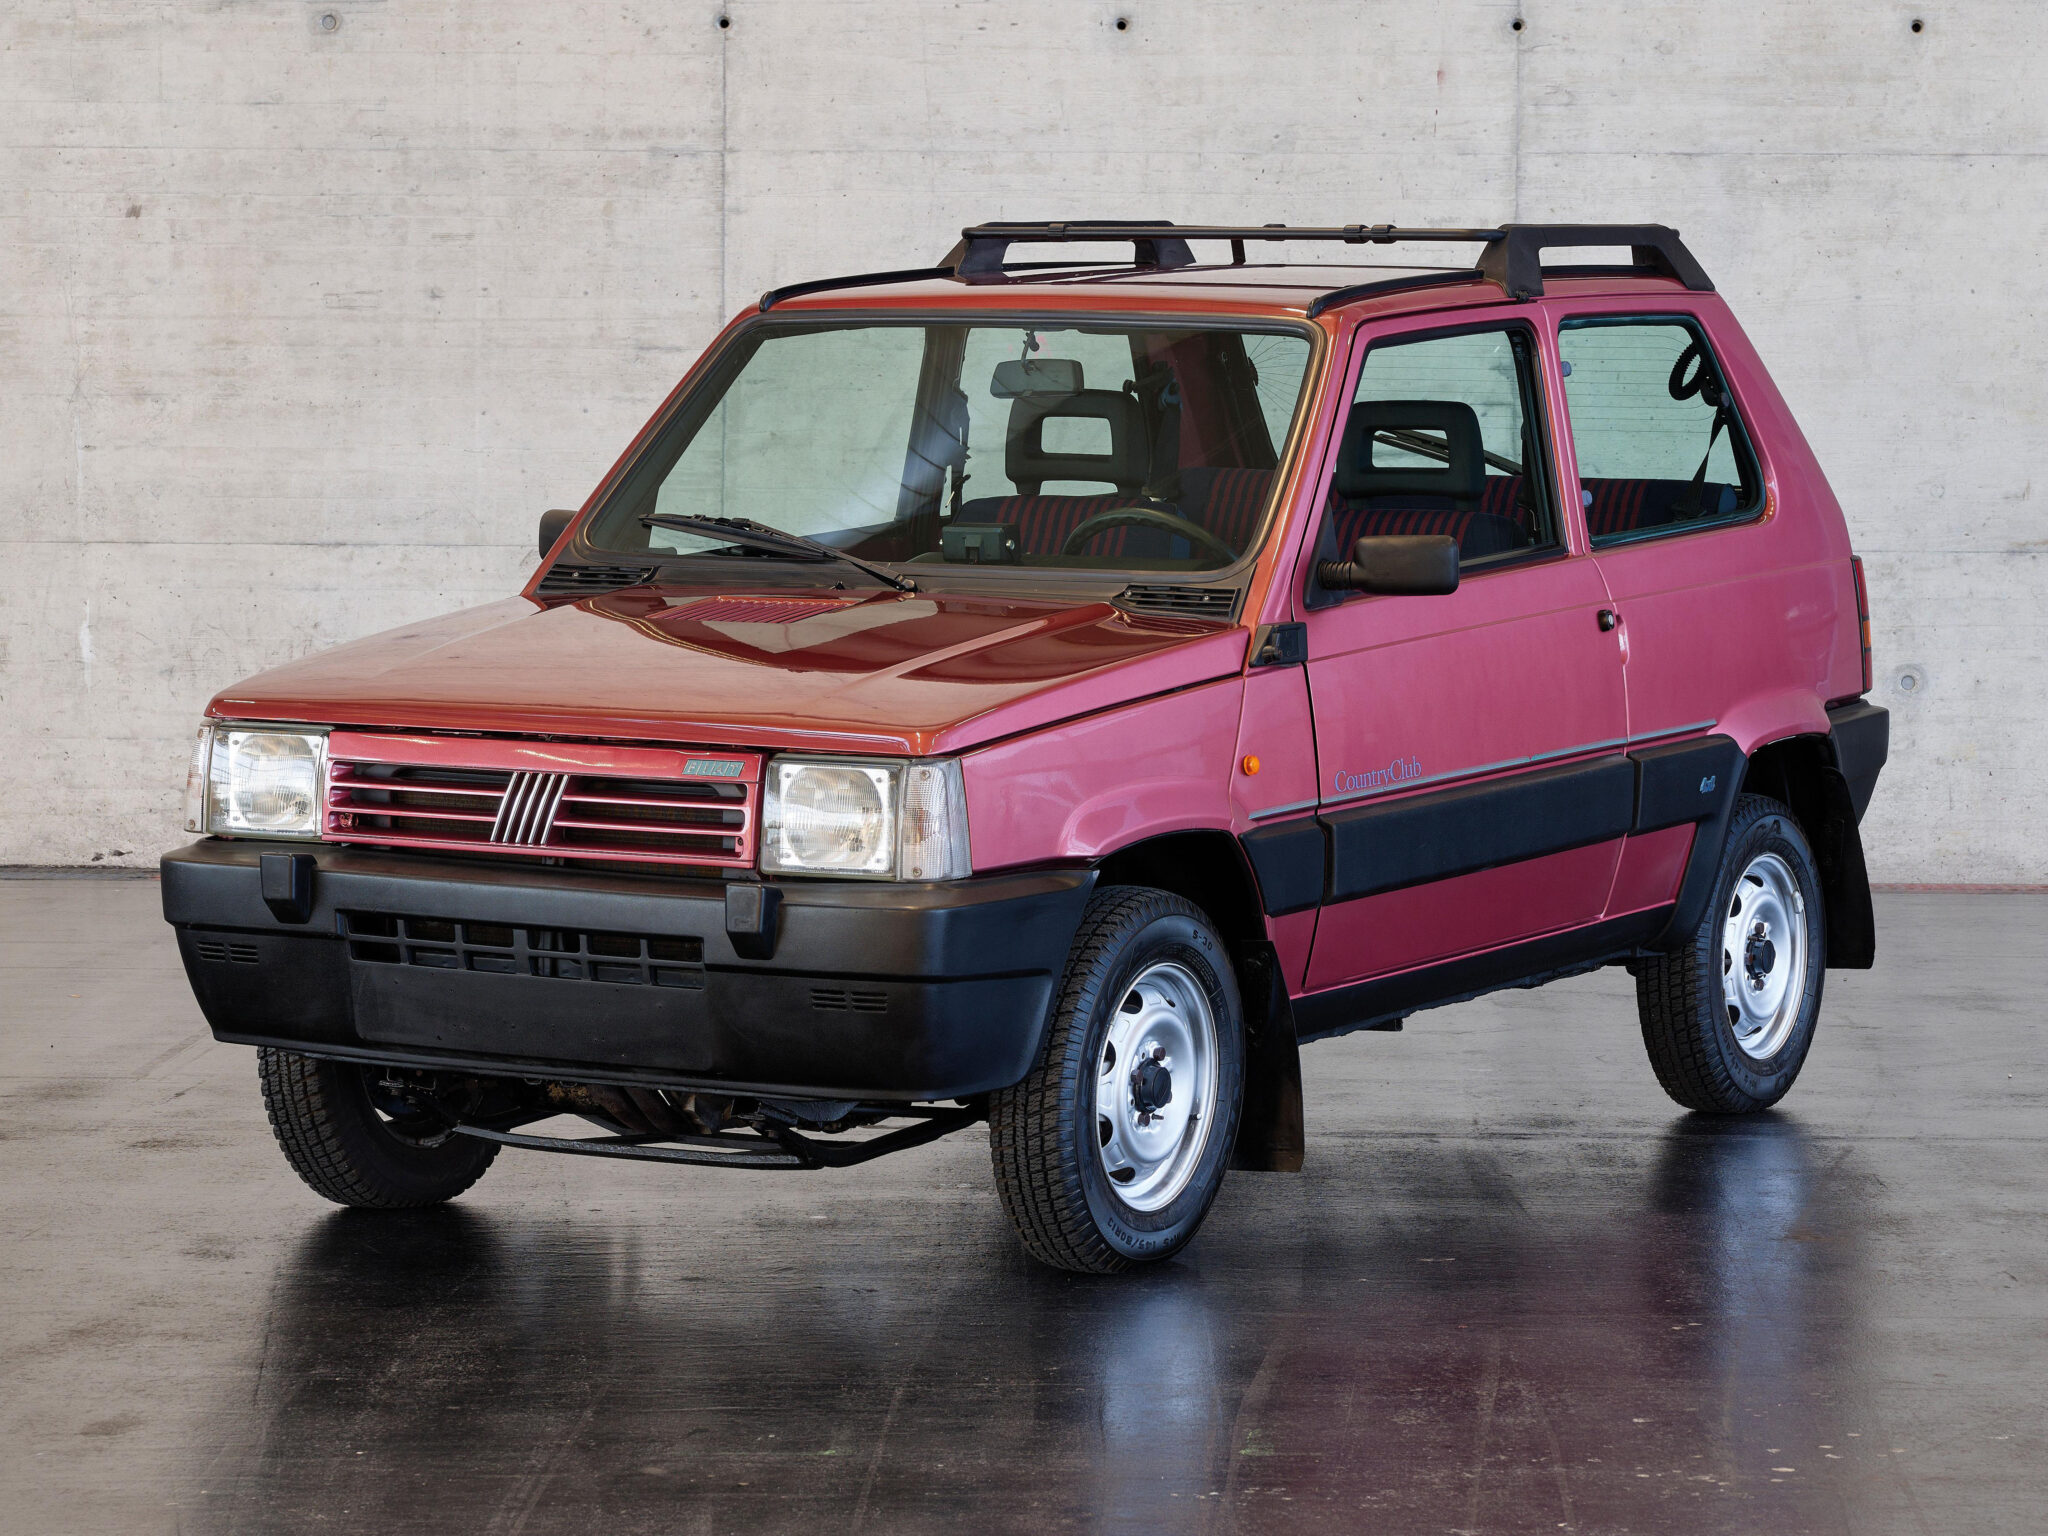 10-1993-Steyr-Fiat-Panda-4x4-1-2048x1536